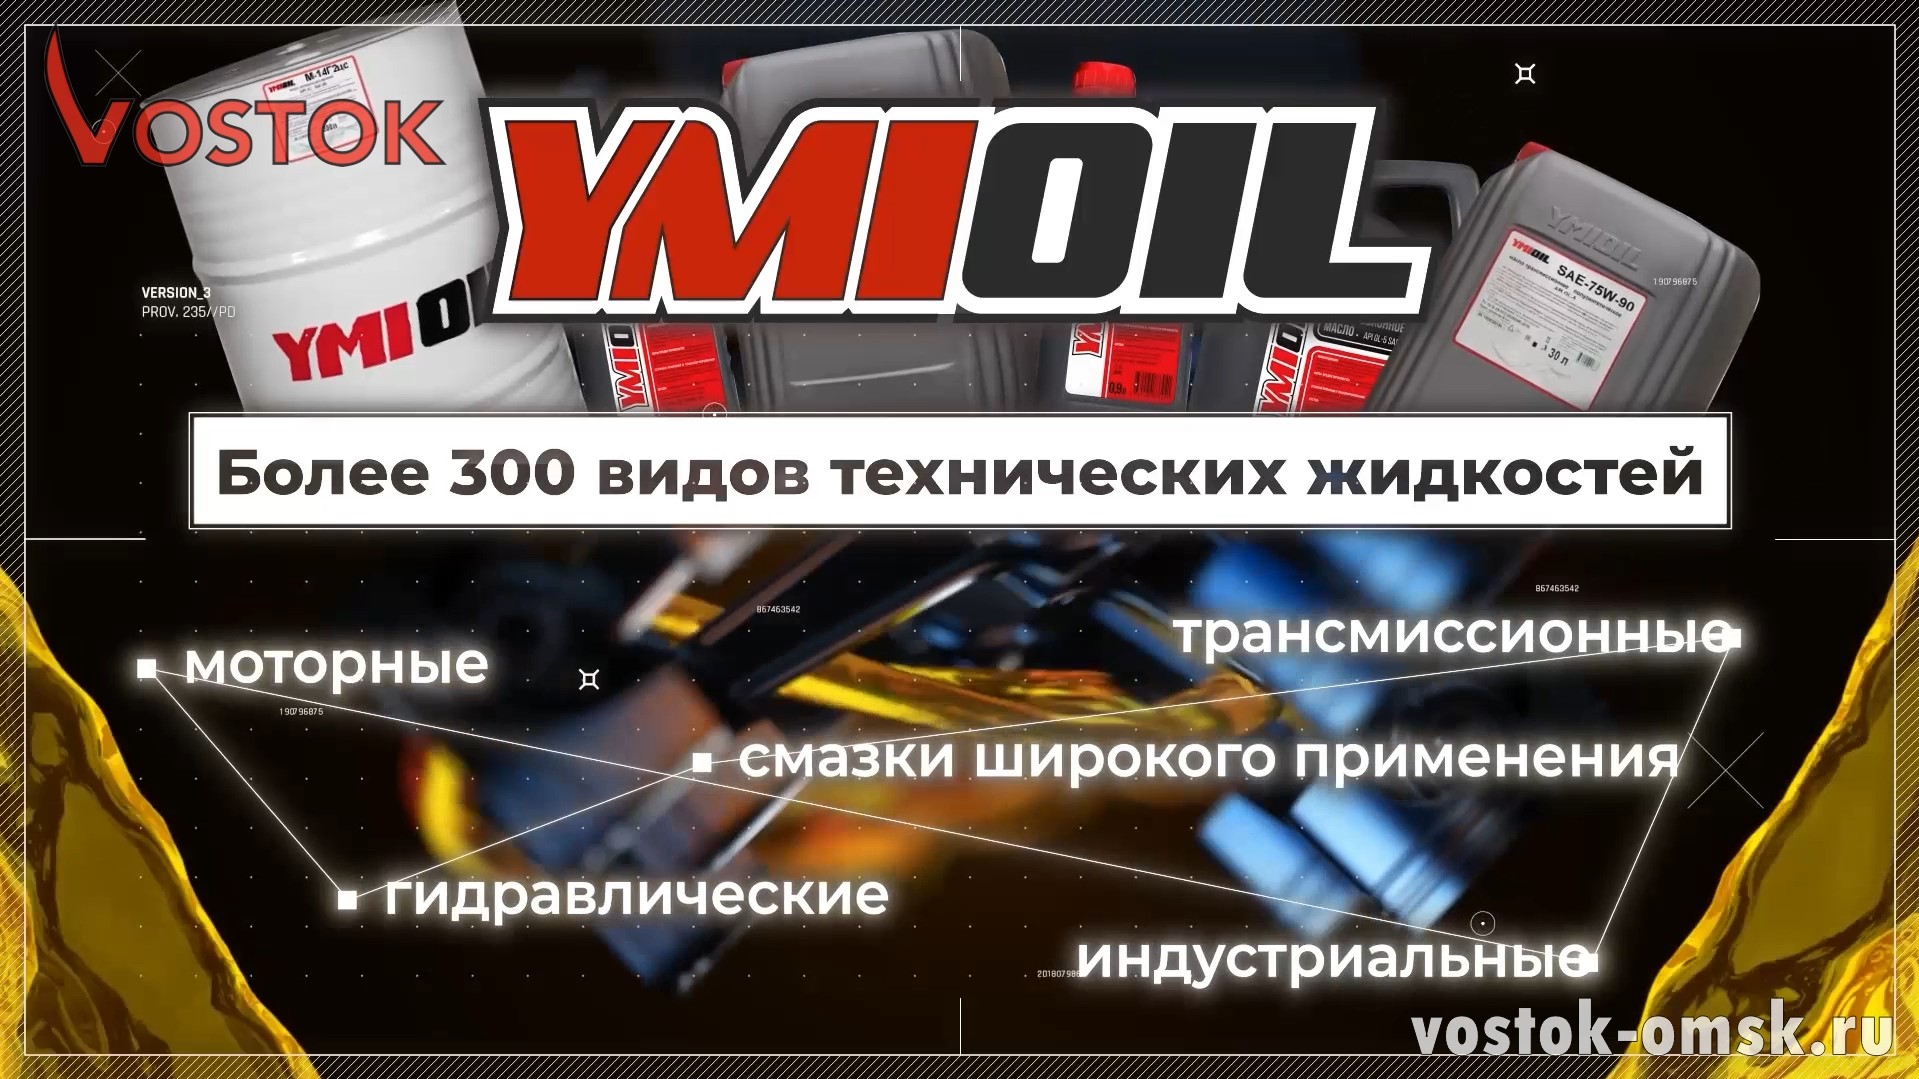 Бренд Ymioil в интернет-магазине Vostok